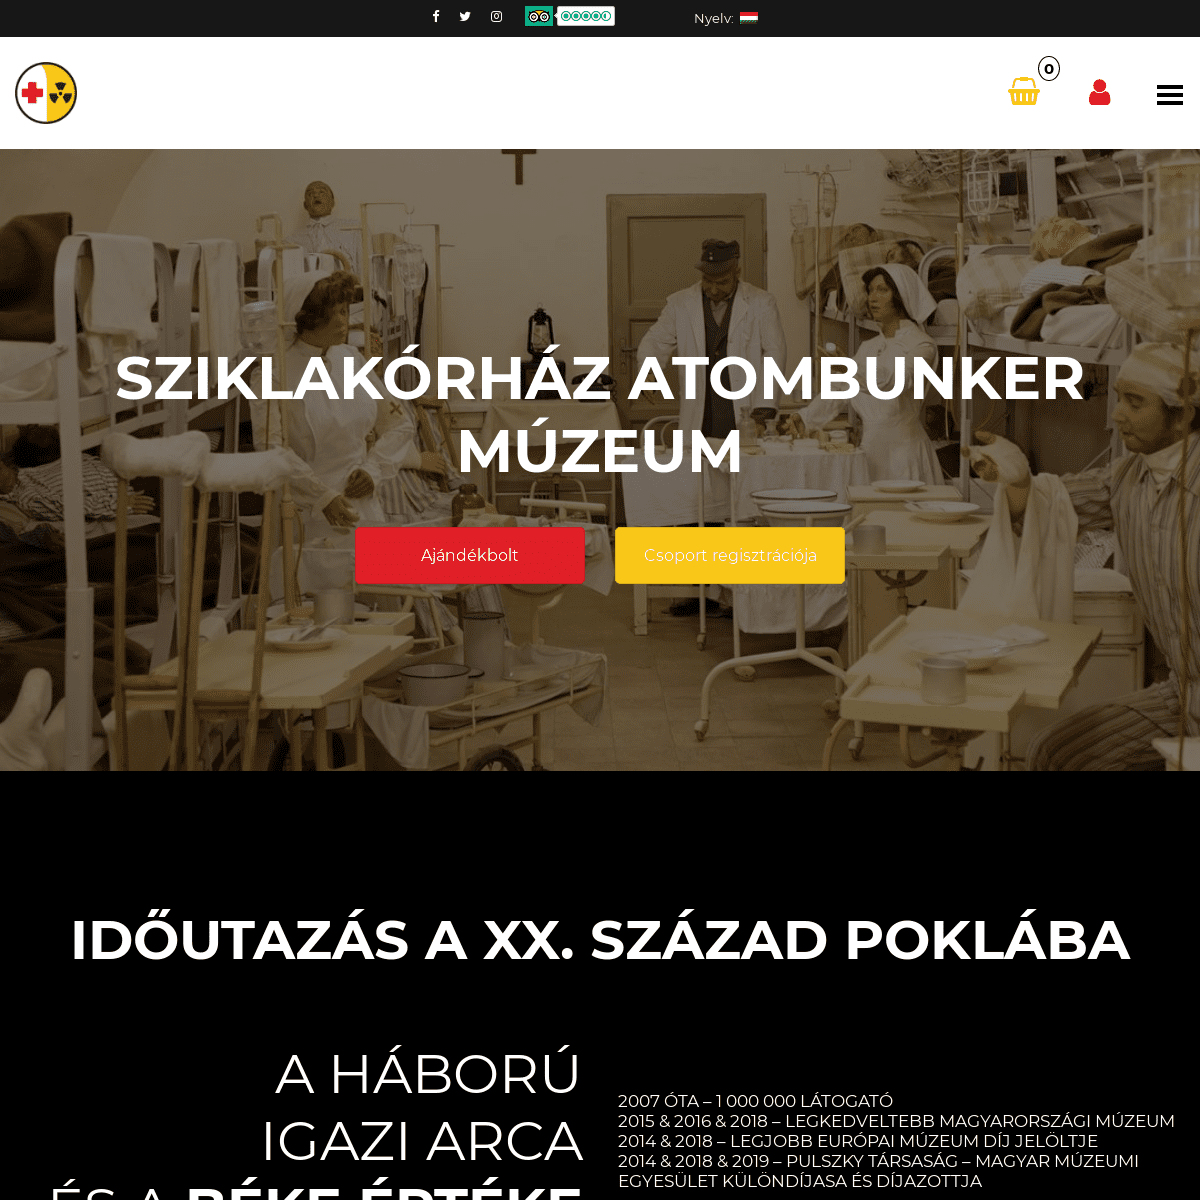 A complete backup of sziklakorhaz.eu